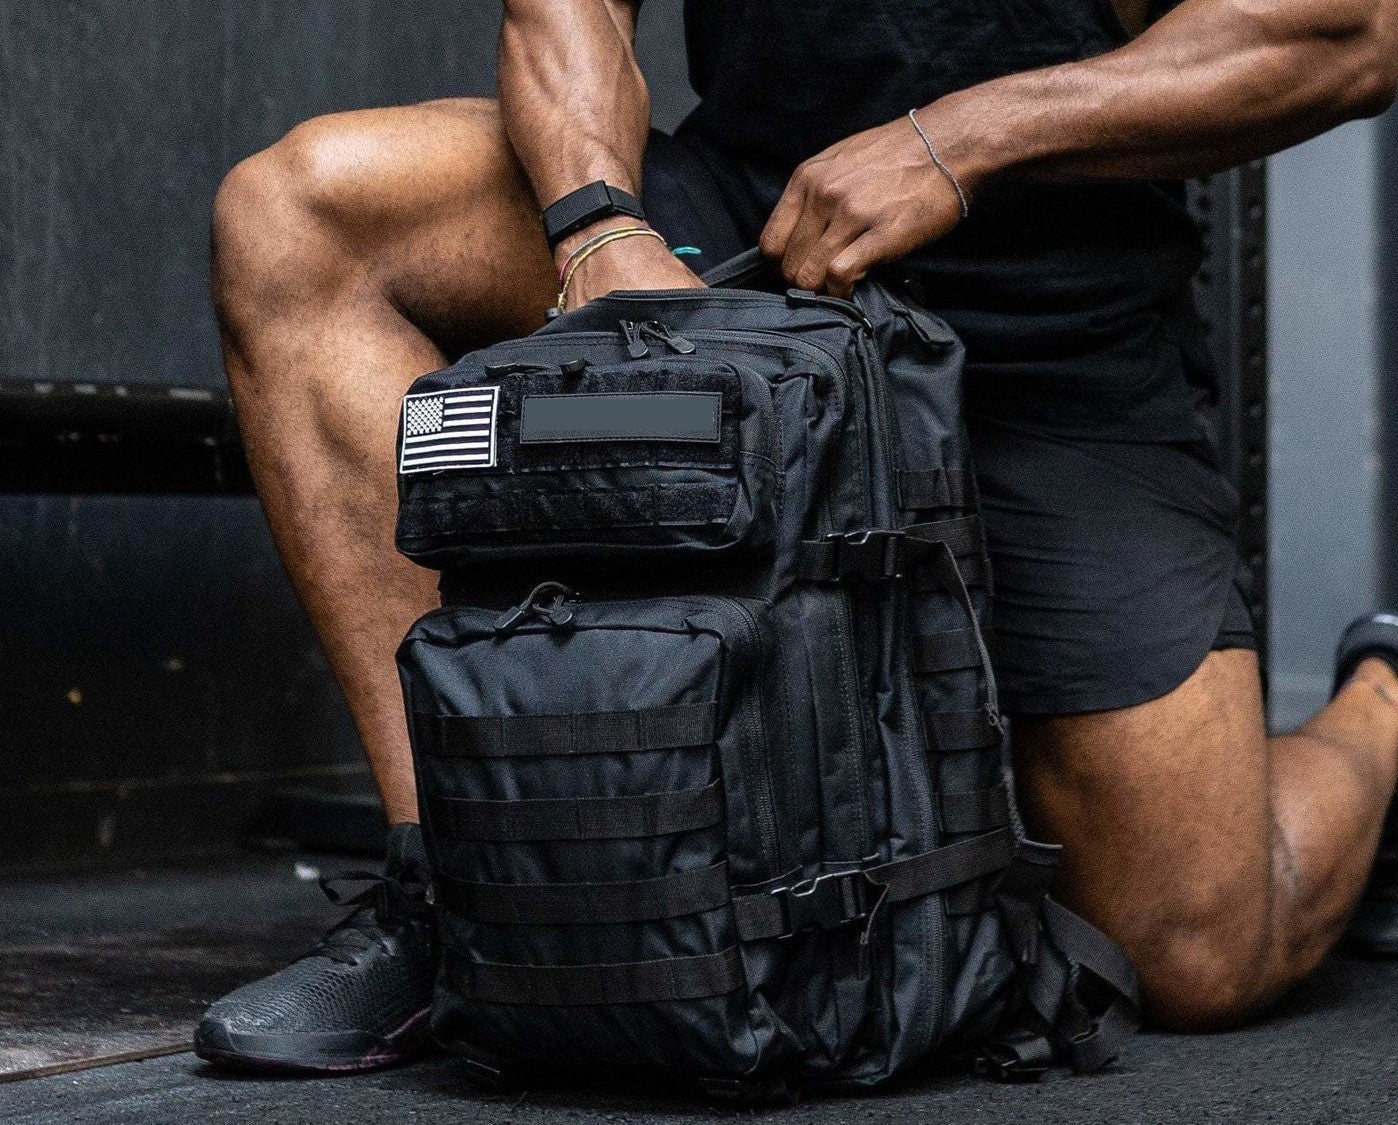 Ruksac Ultra - Compact Fitness Backpack